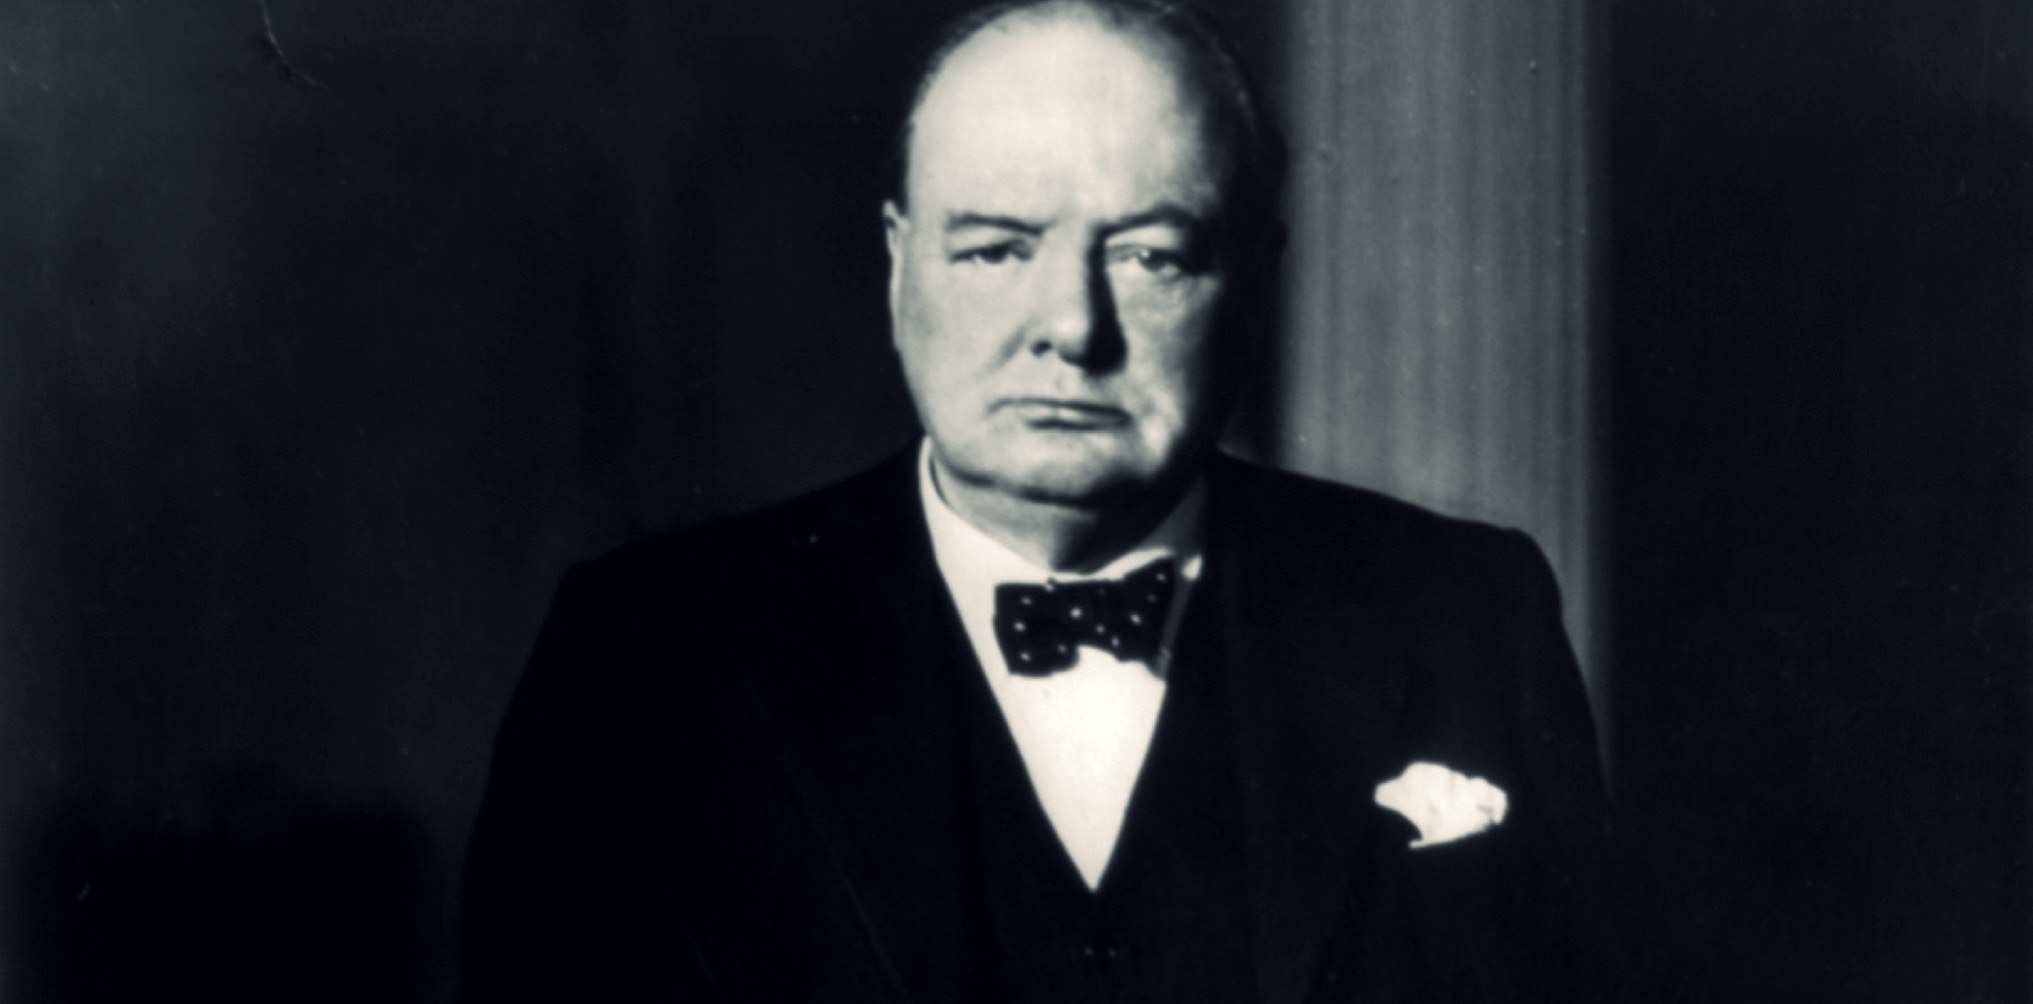 Churchill: Walking With Destiny